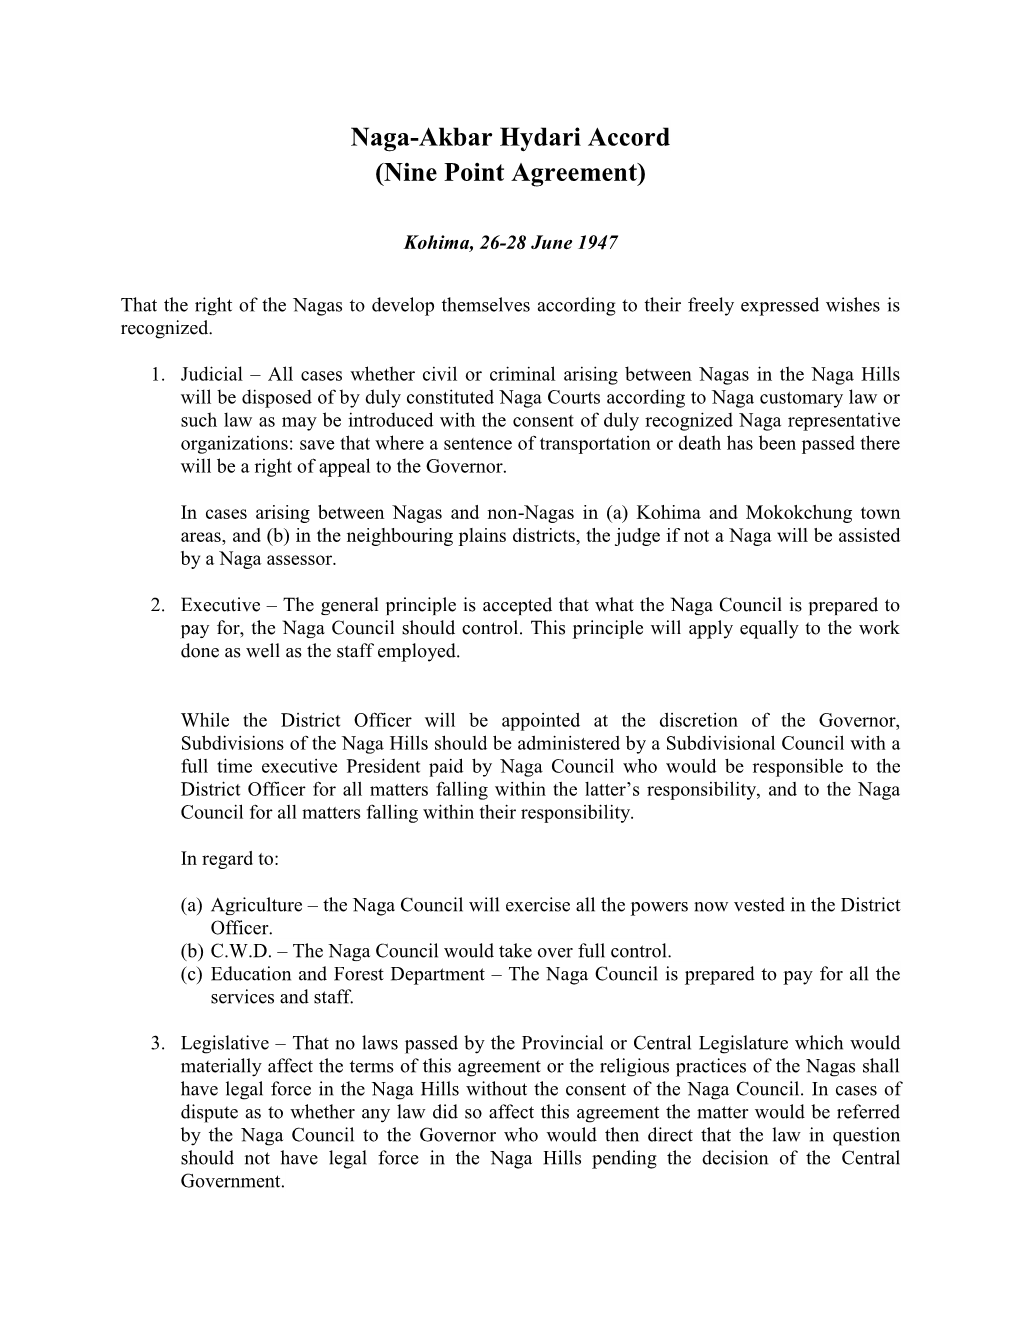 Naga-Akbar Hydari Accord (Nine Point Agreement)